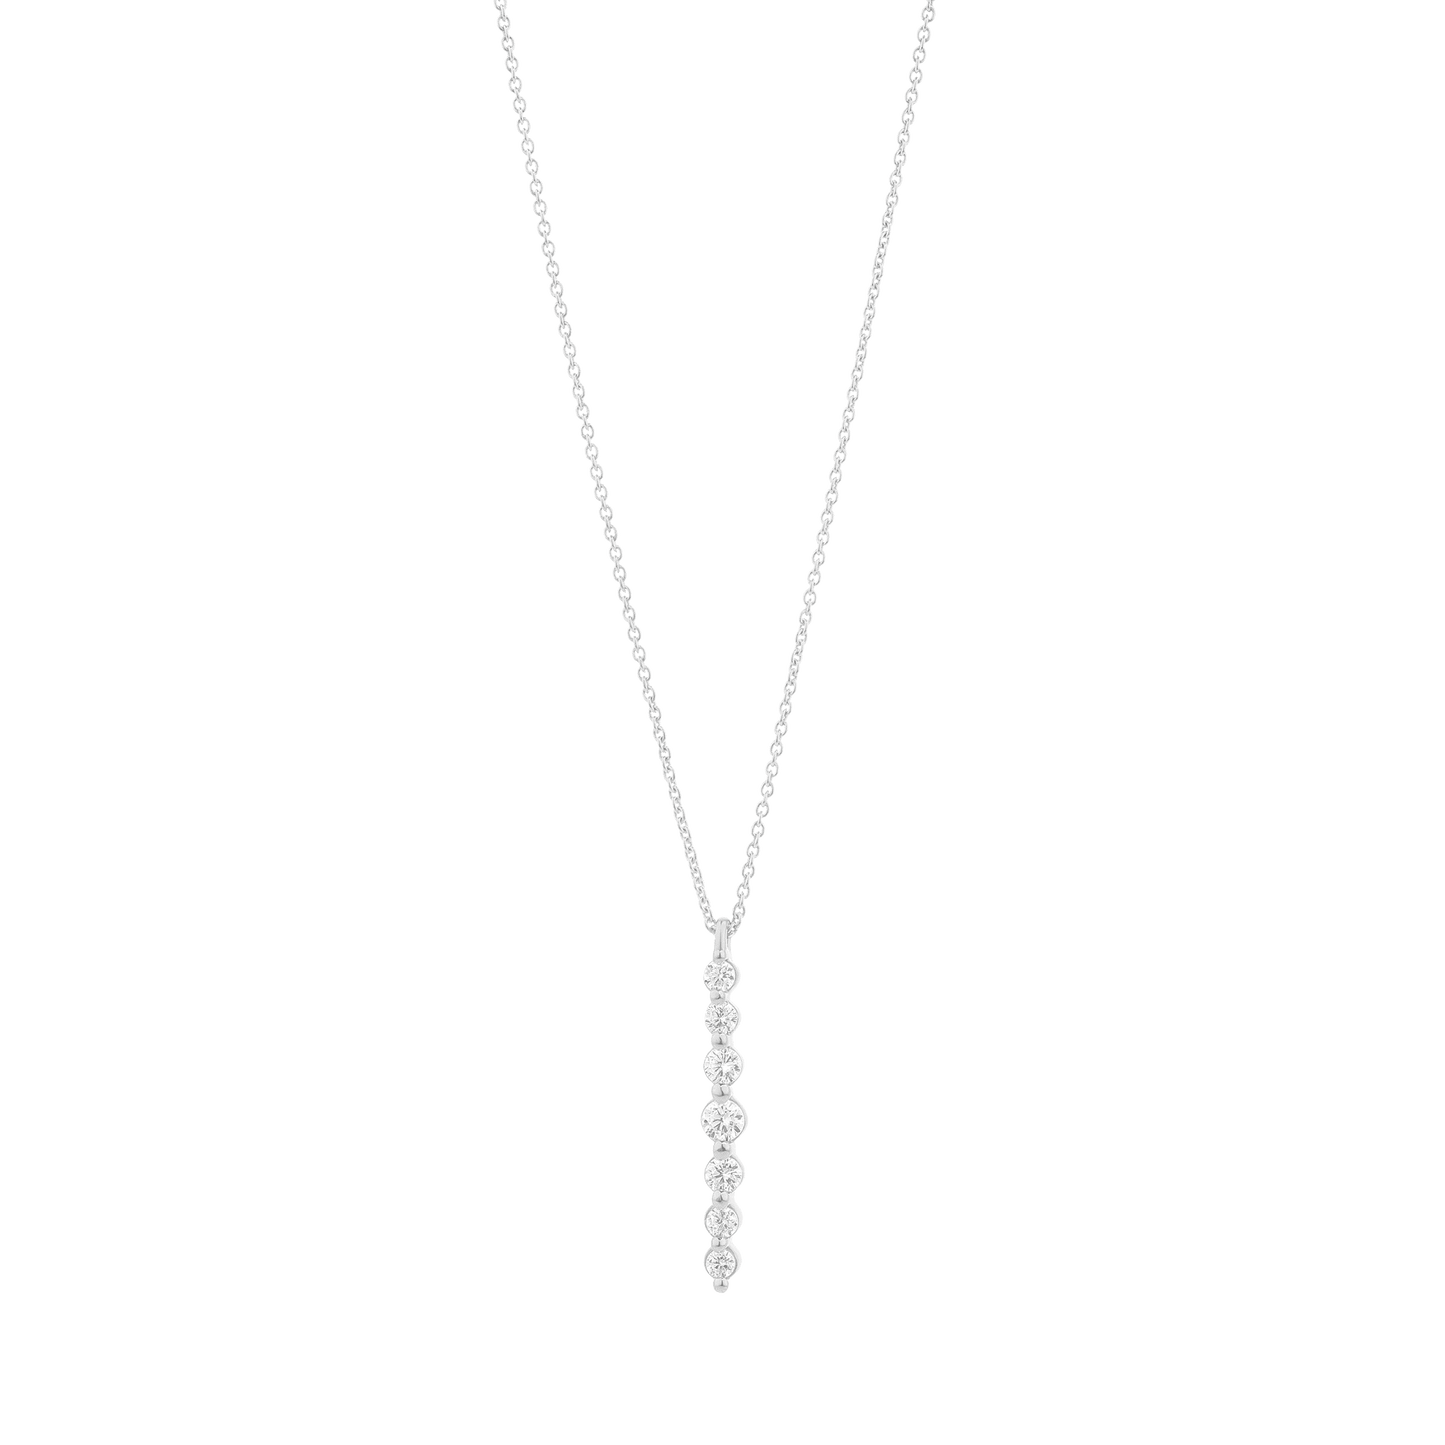 Vertical 7 Diamonds Bar Necklace - 14K Rose Gold Necklaces magal-dev 